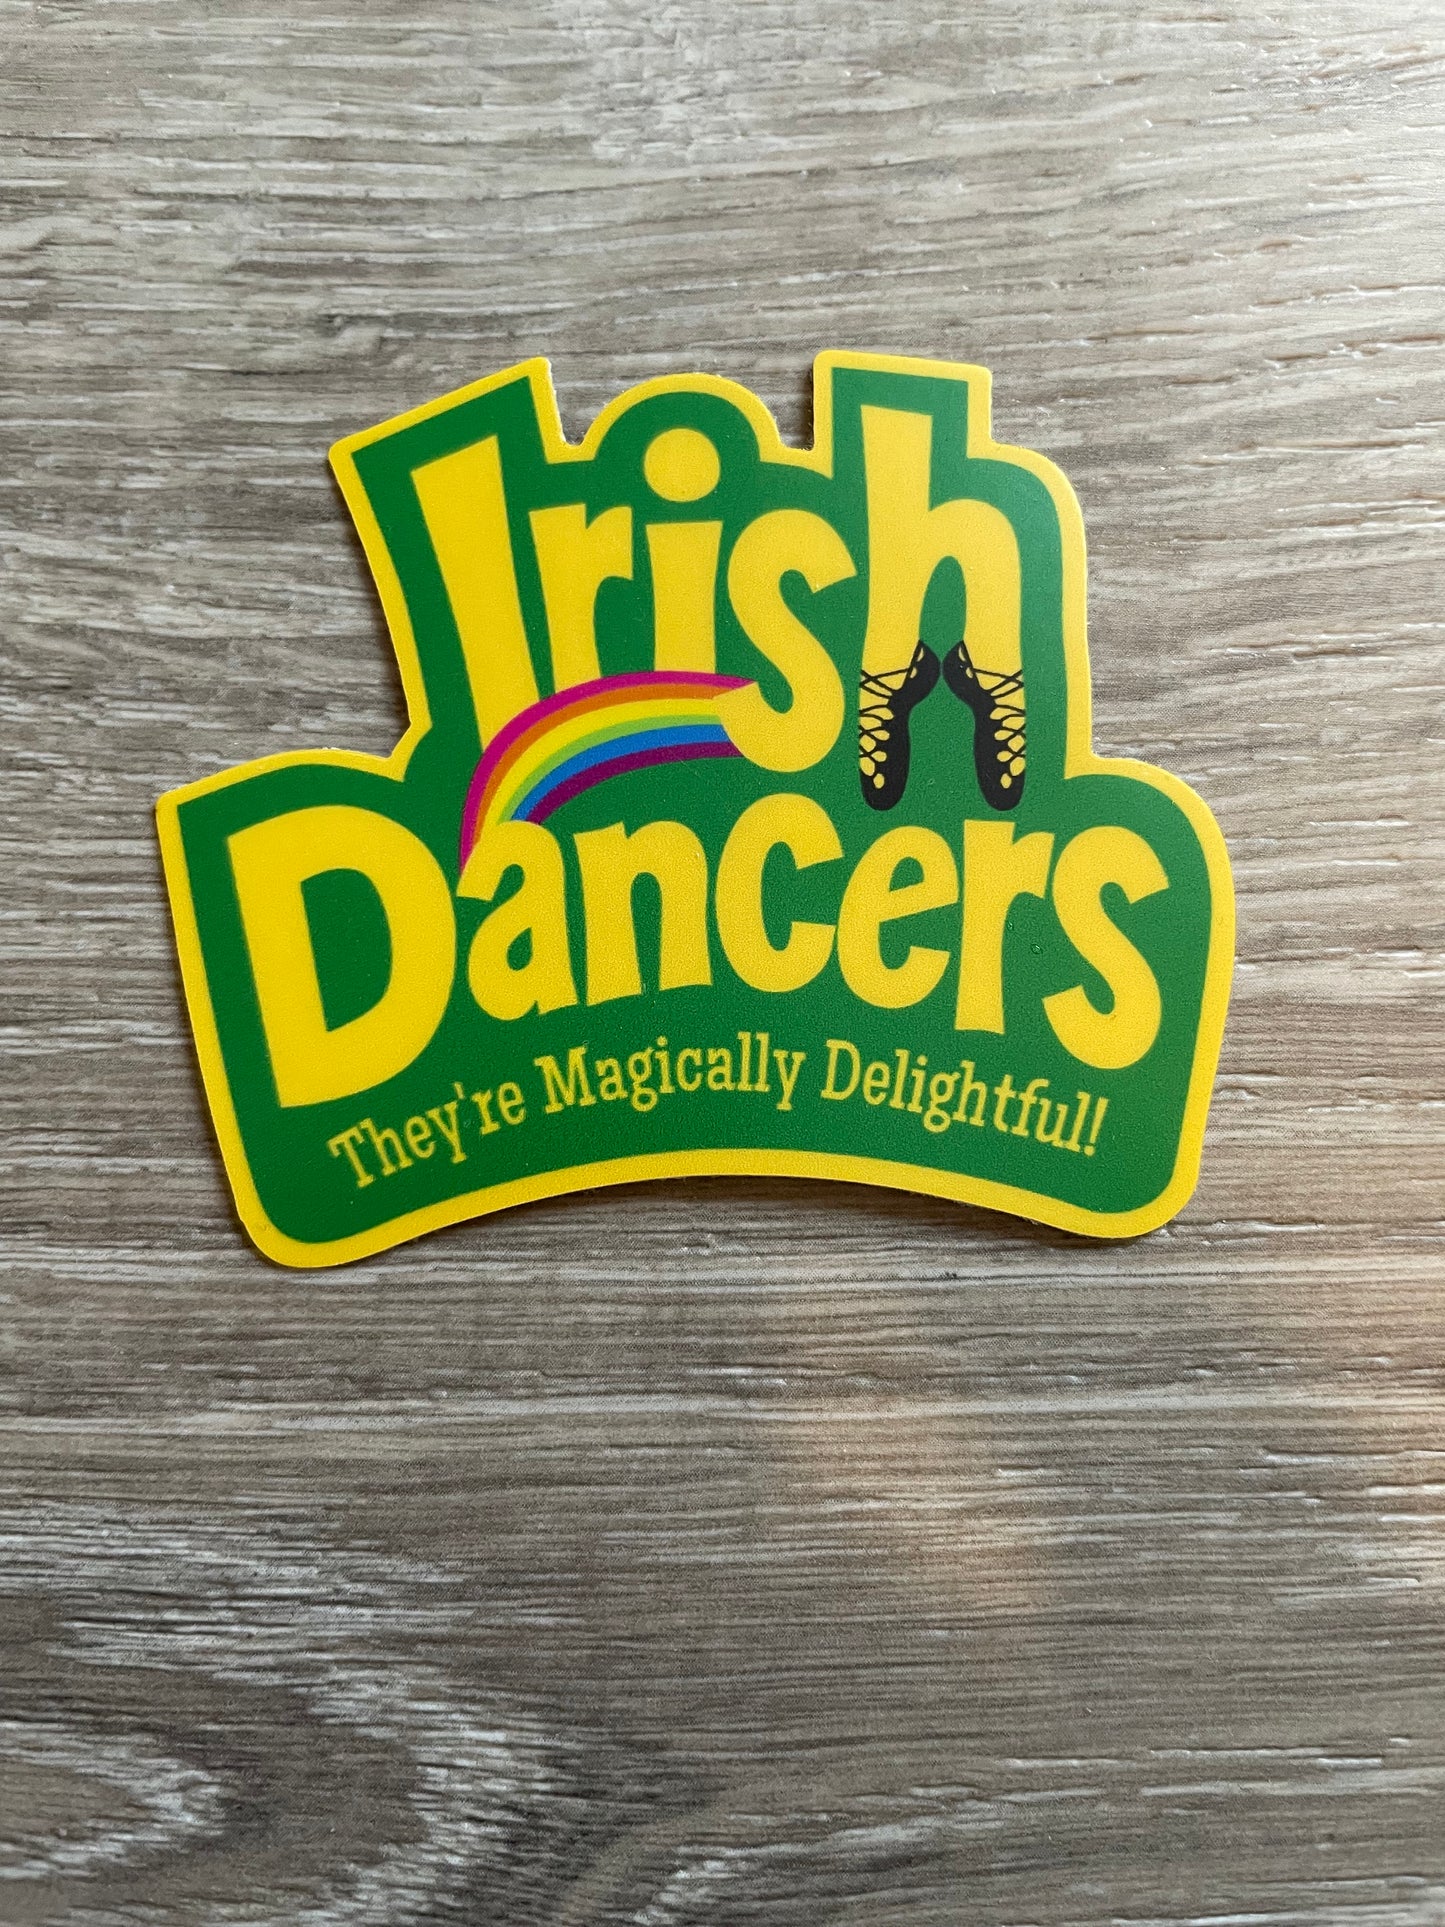 Irish Dancers: Magically Delightful Vinyl Sticker, 3" x 2.6"